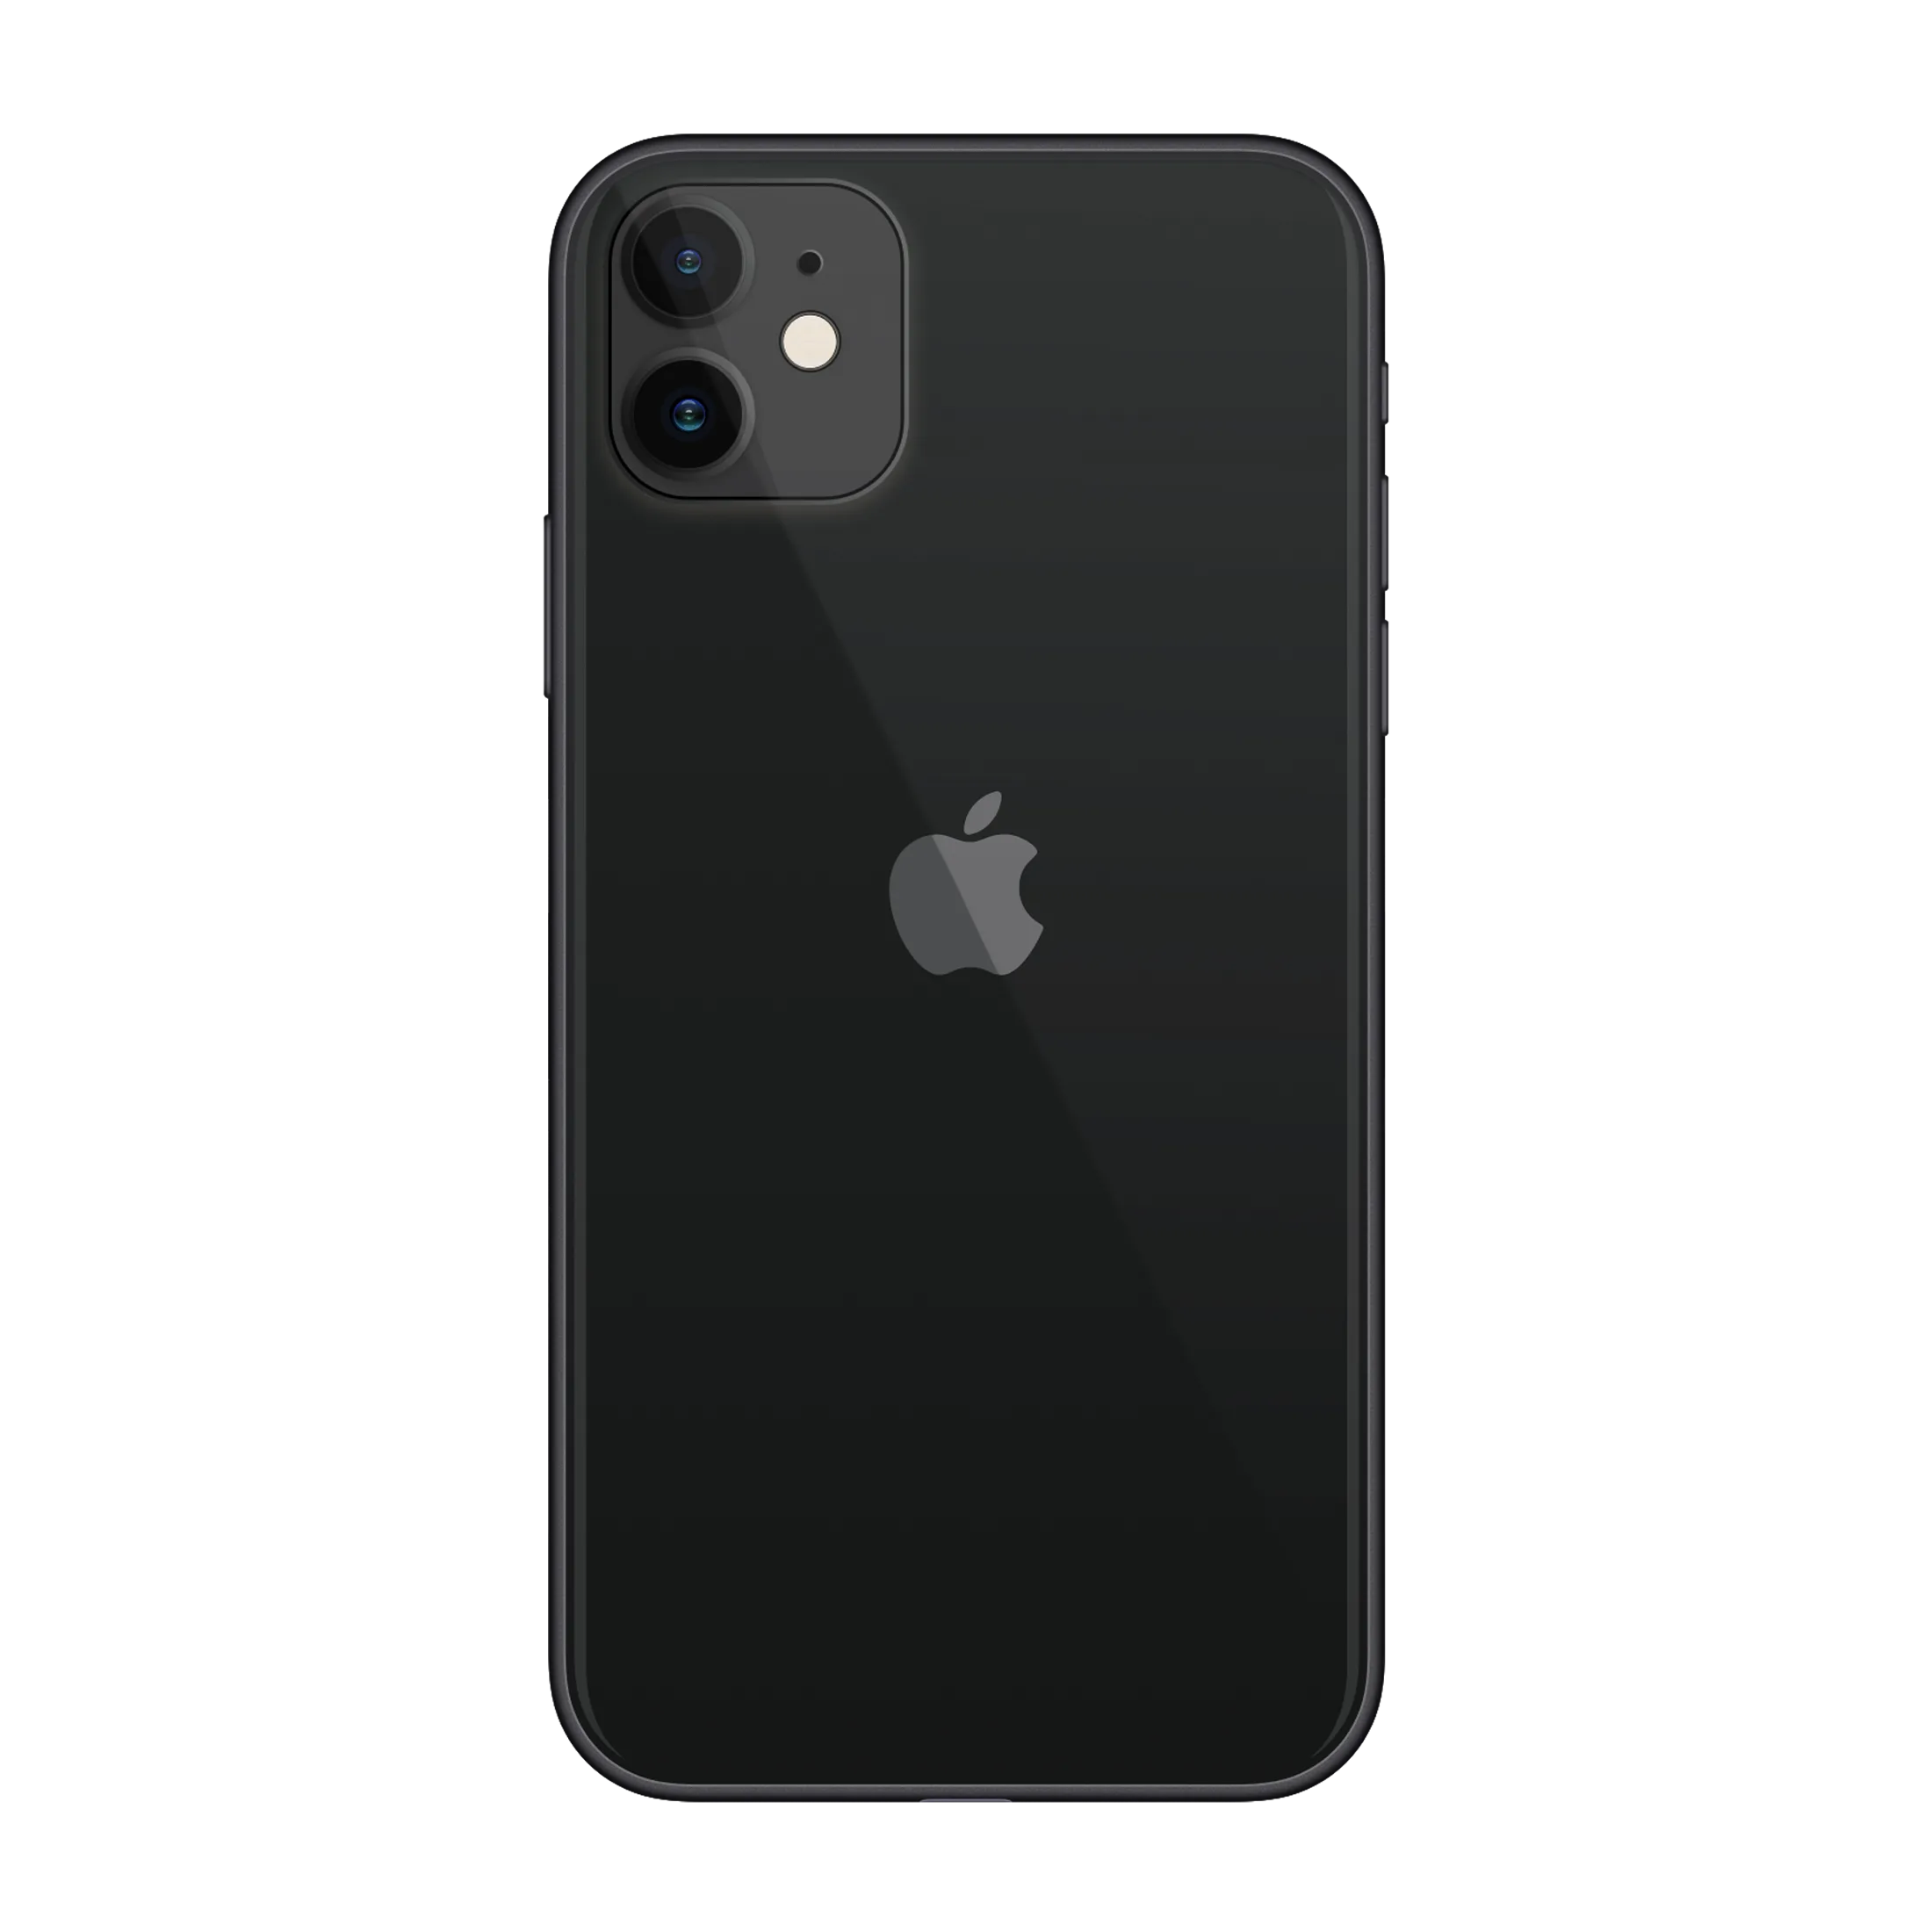 Айфон 11 калининград. Apple iphone 11 64 ГБ черный. Apple iphone 11 64gb Black. Apple iphone 11 128gb Black. Iphone 11, 64 ГБ, чёрный.